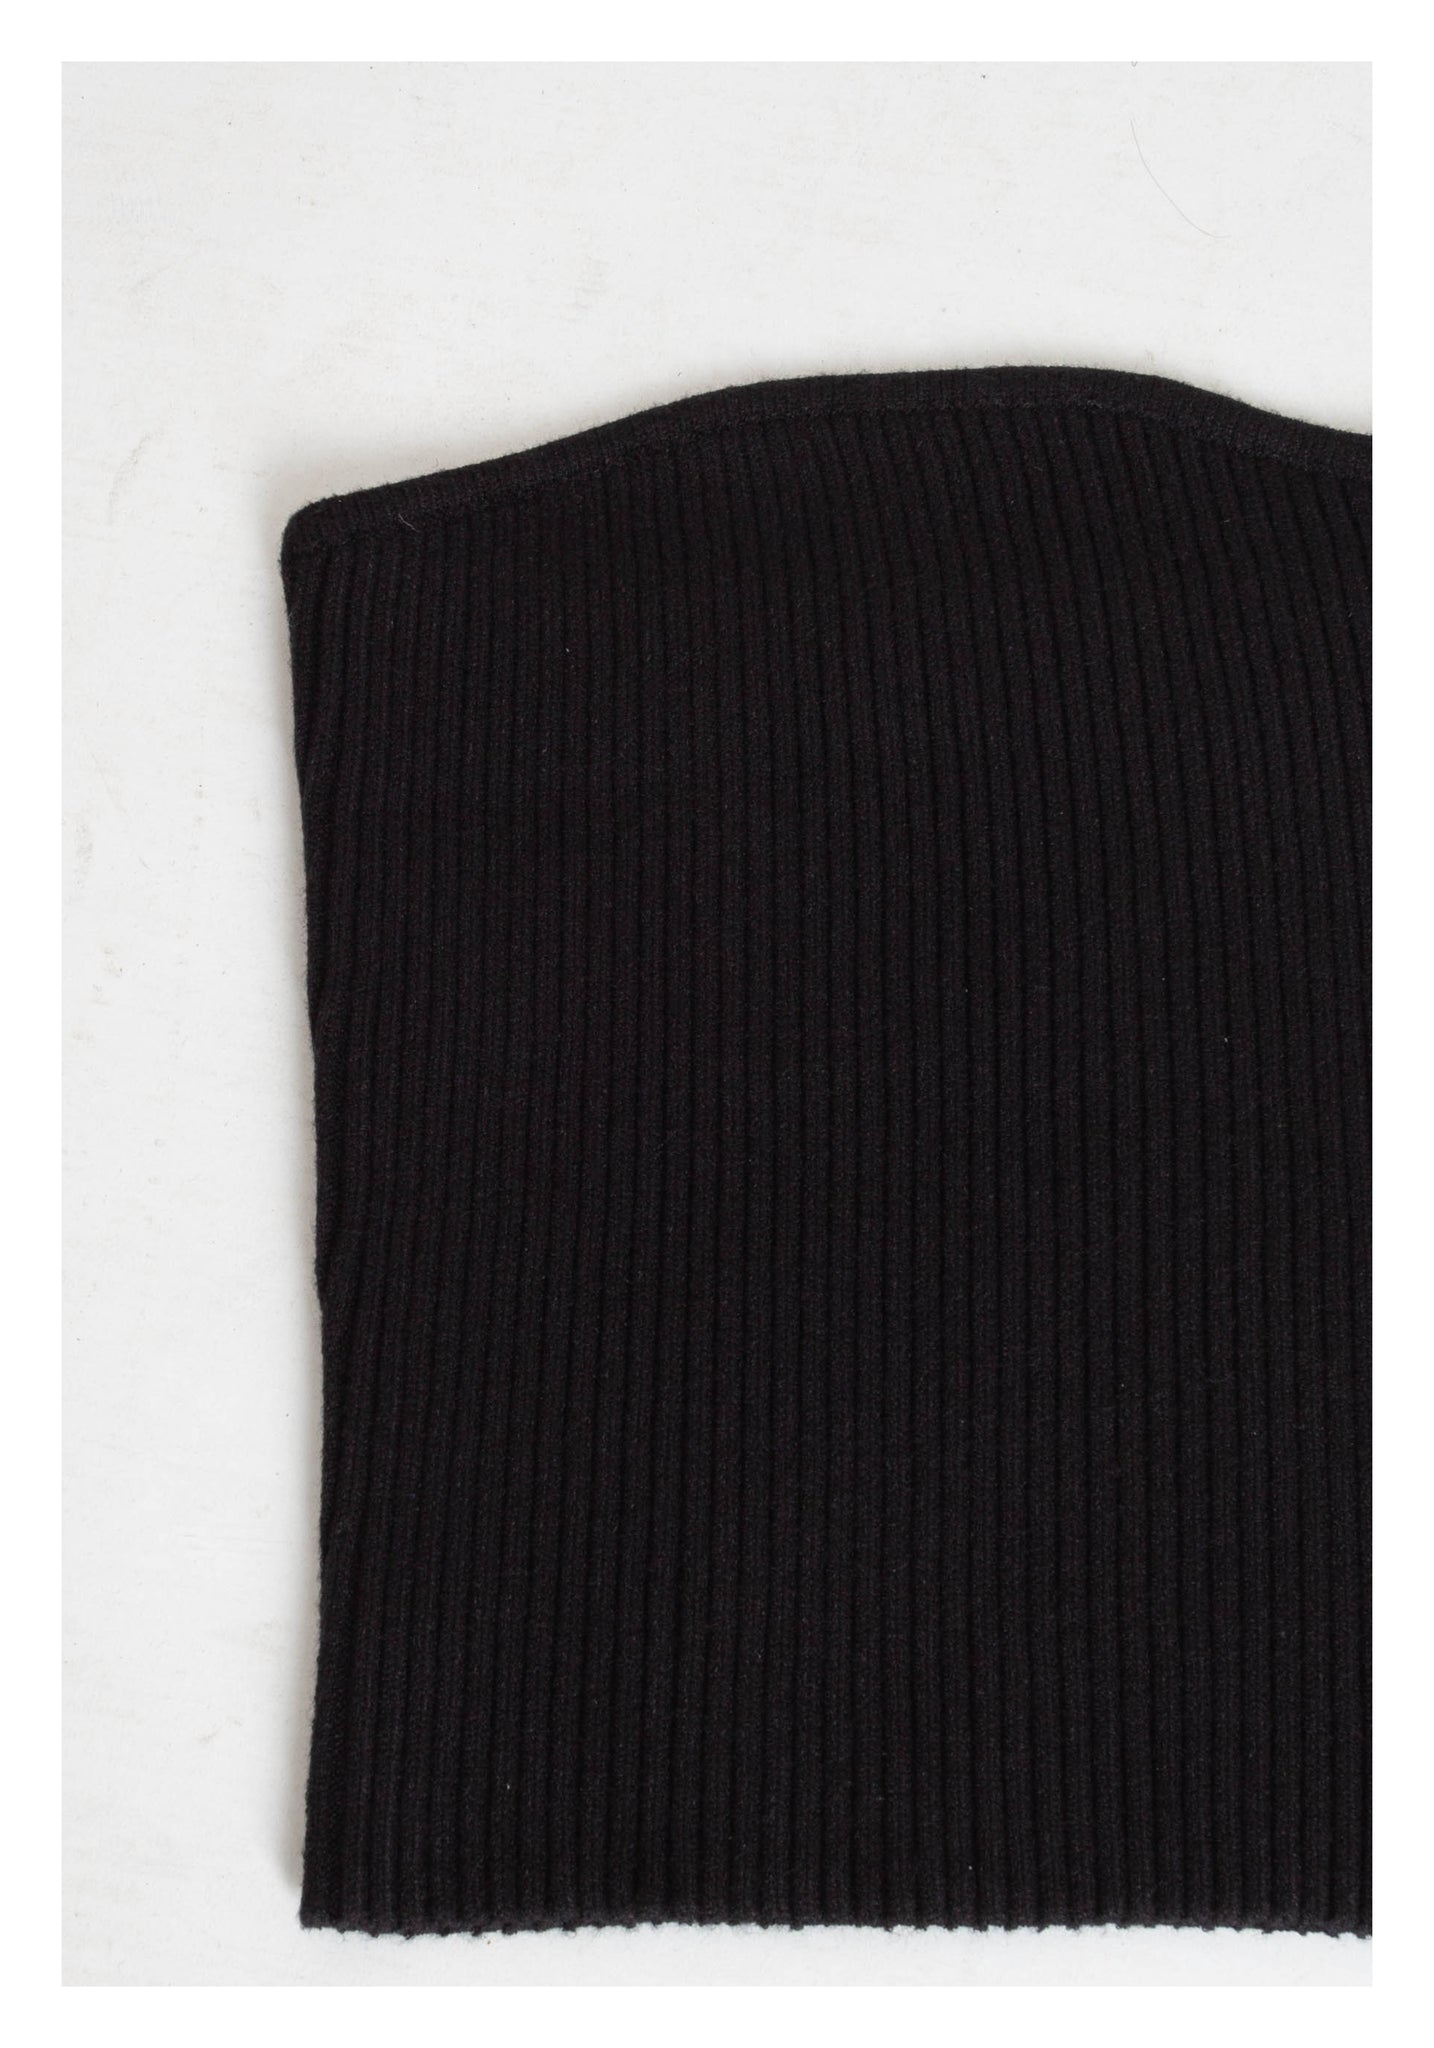 Knit Tube Top Black - whoami